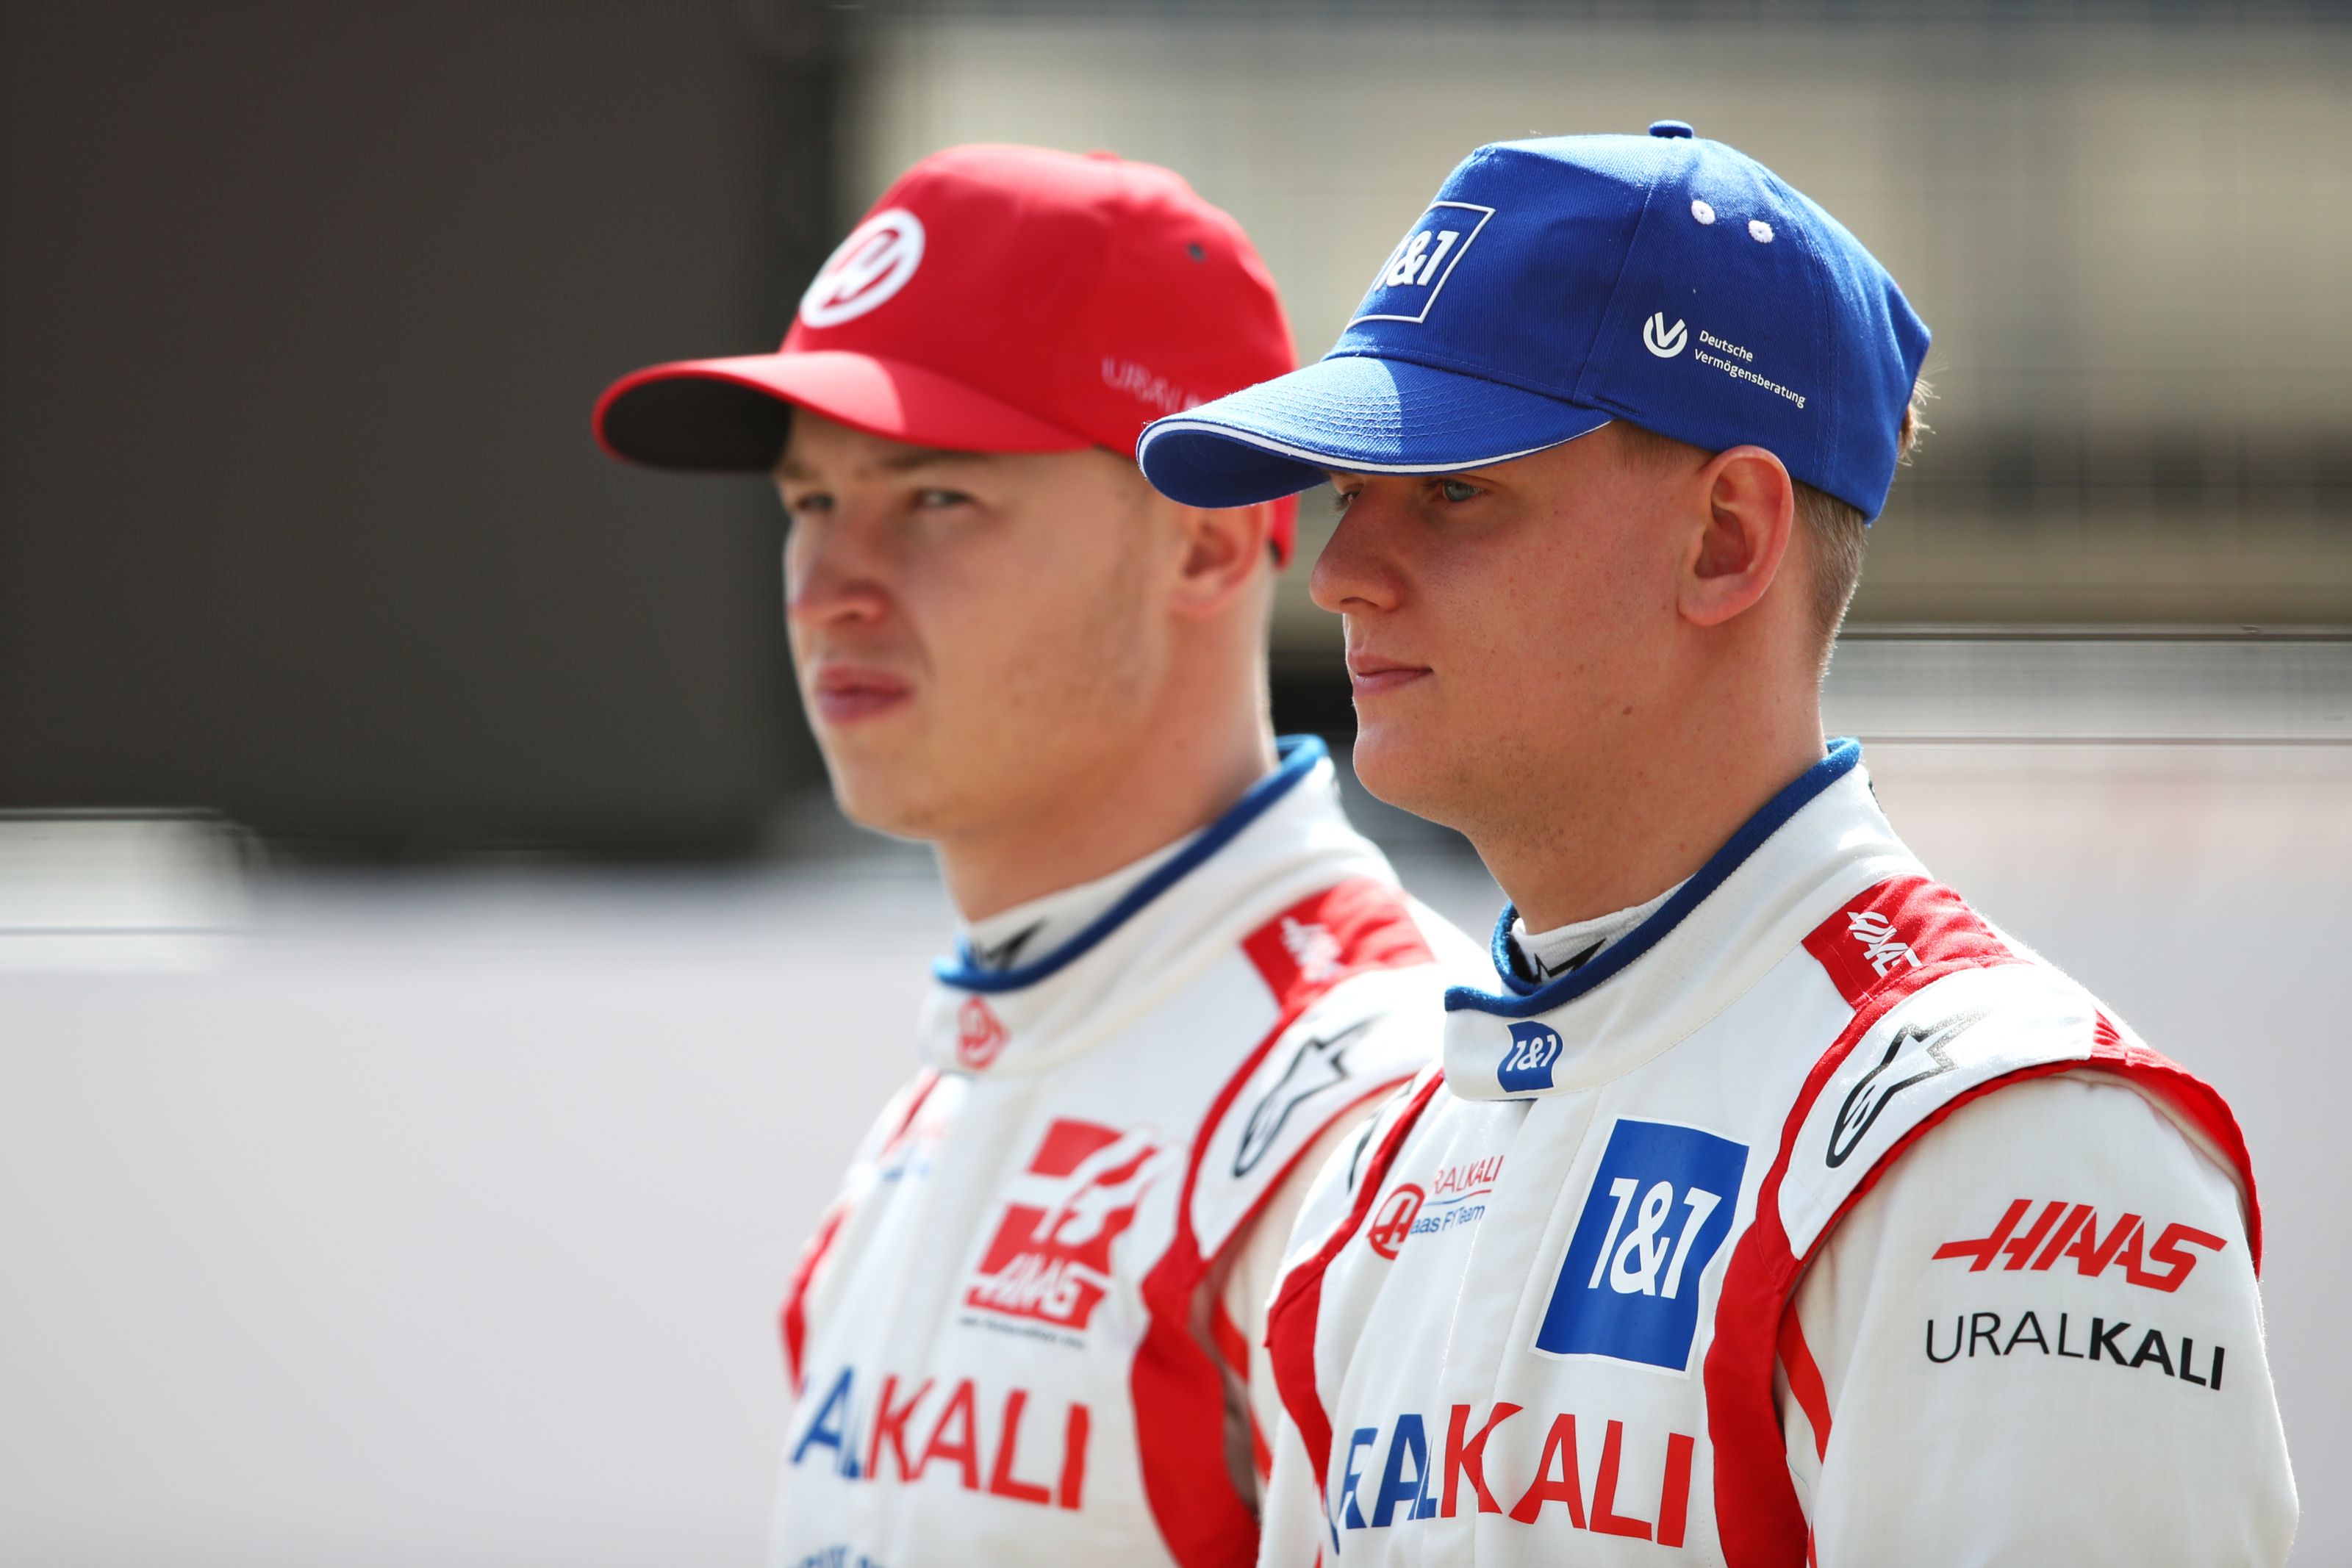 Mick Schumacher, Nikita Mazepin - Haas F1 2021 Lineup